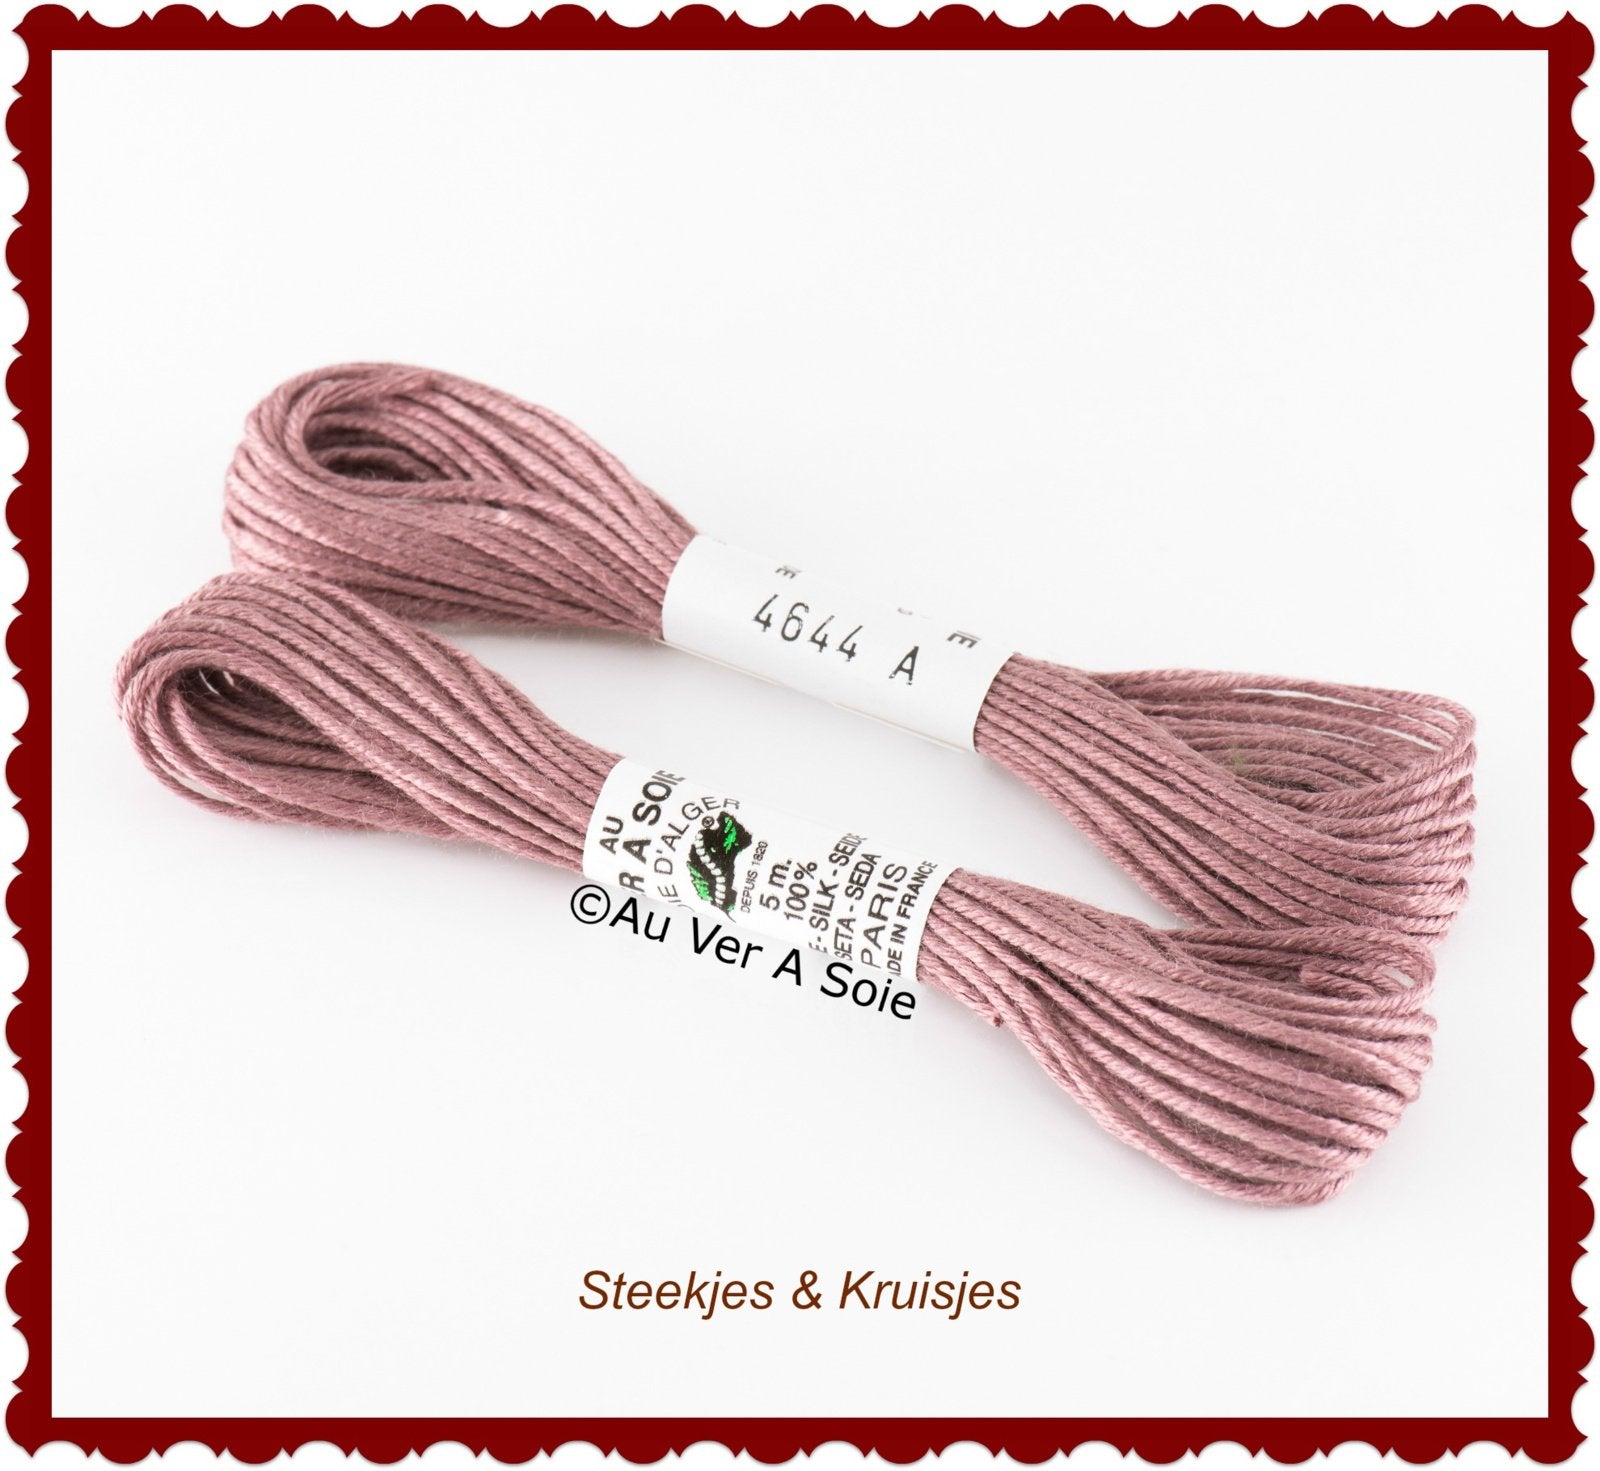 Au ver ie "soie d'alger" silk yarn color no. 4644